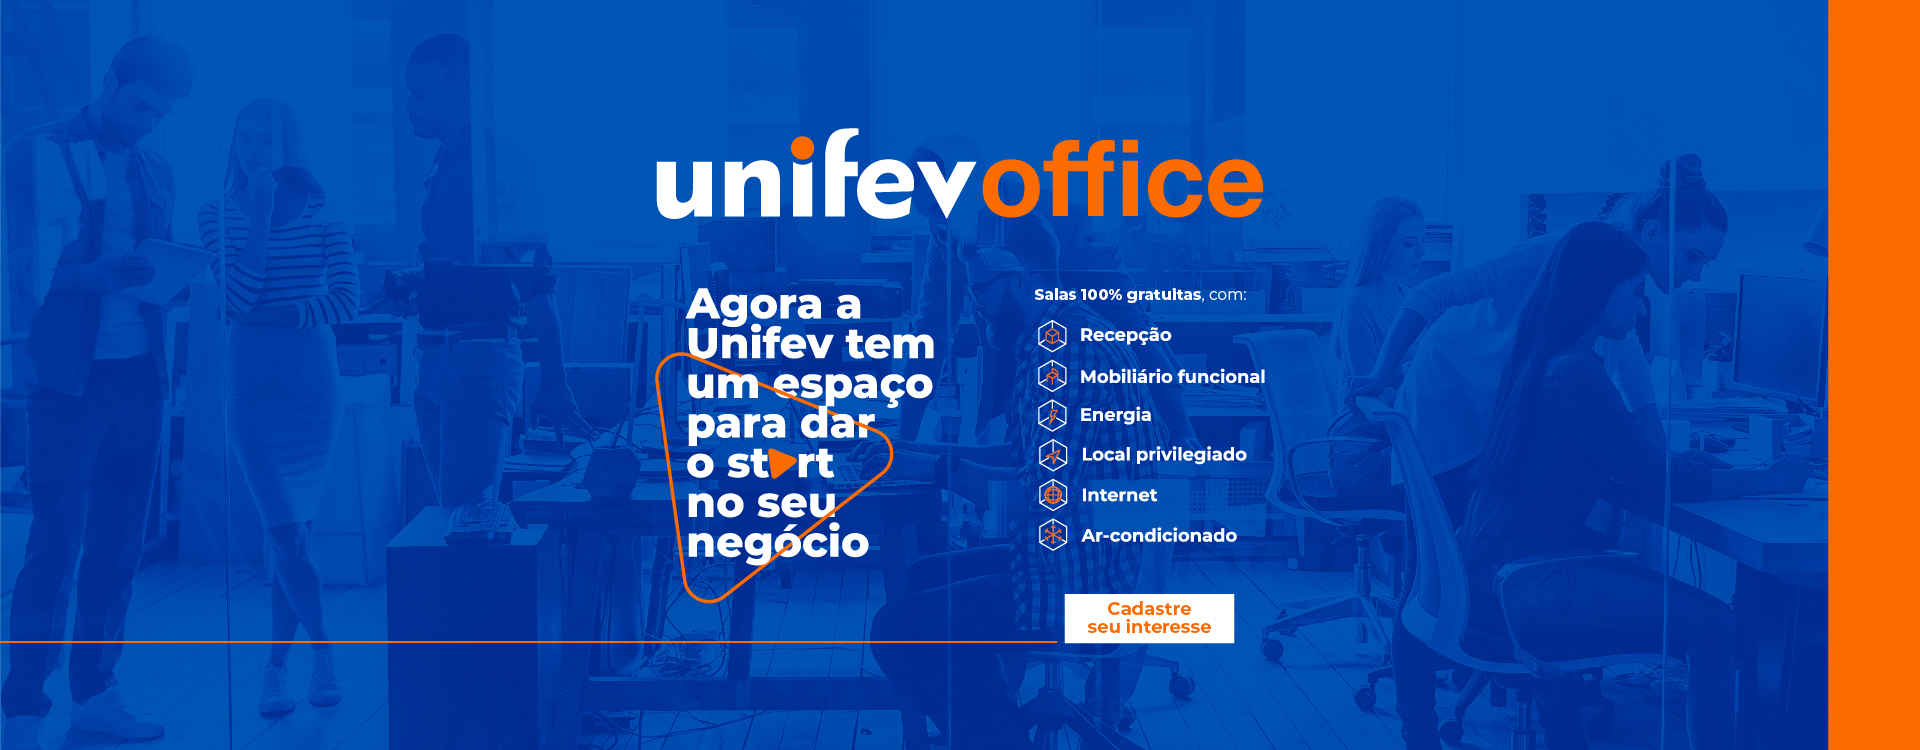 Unifev office